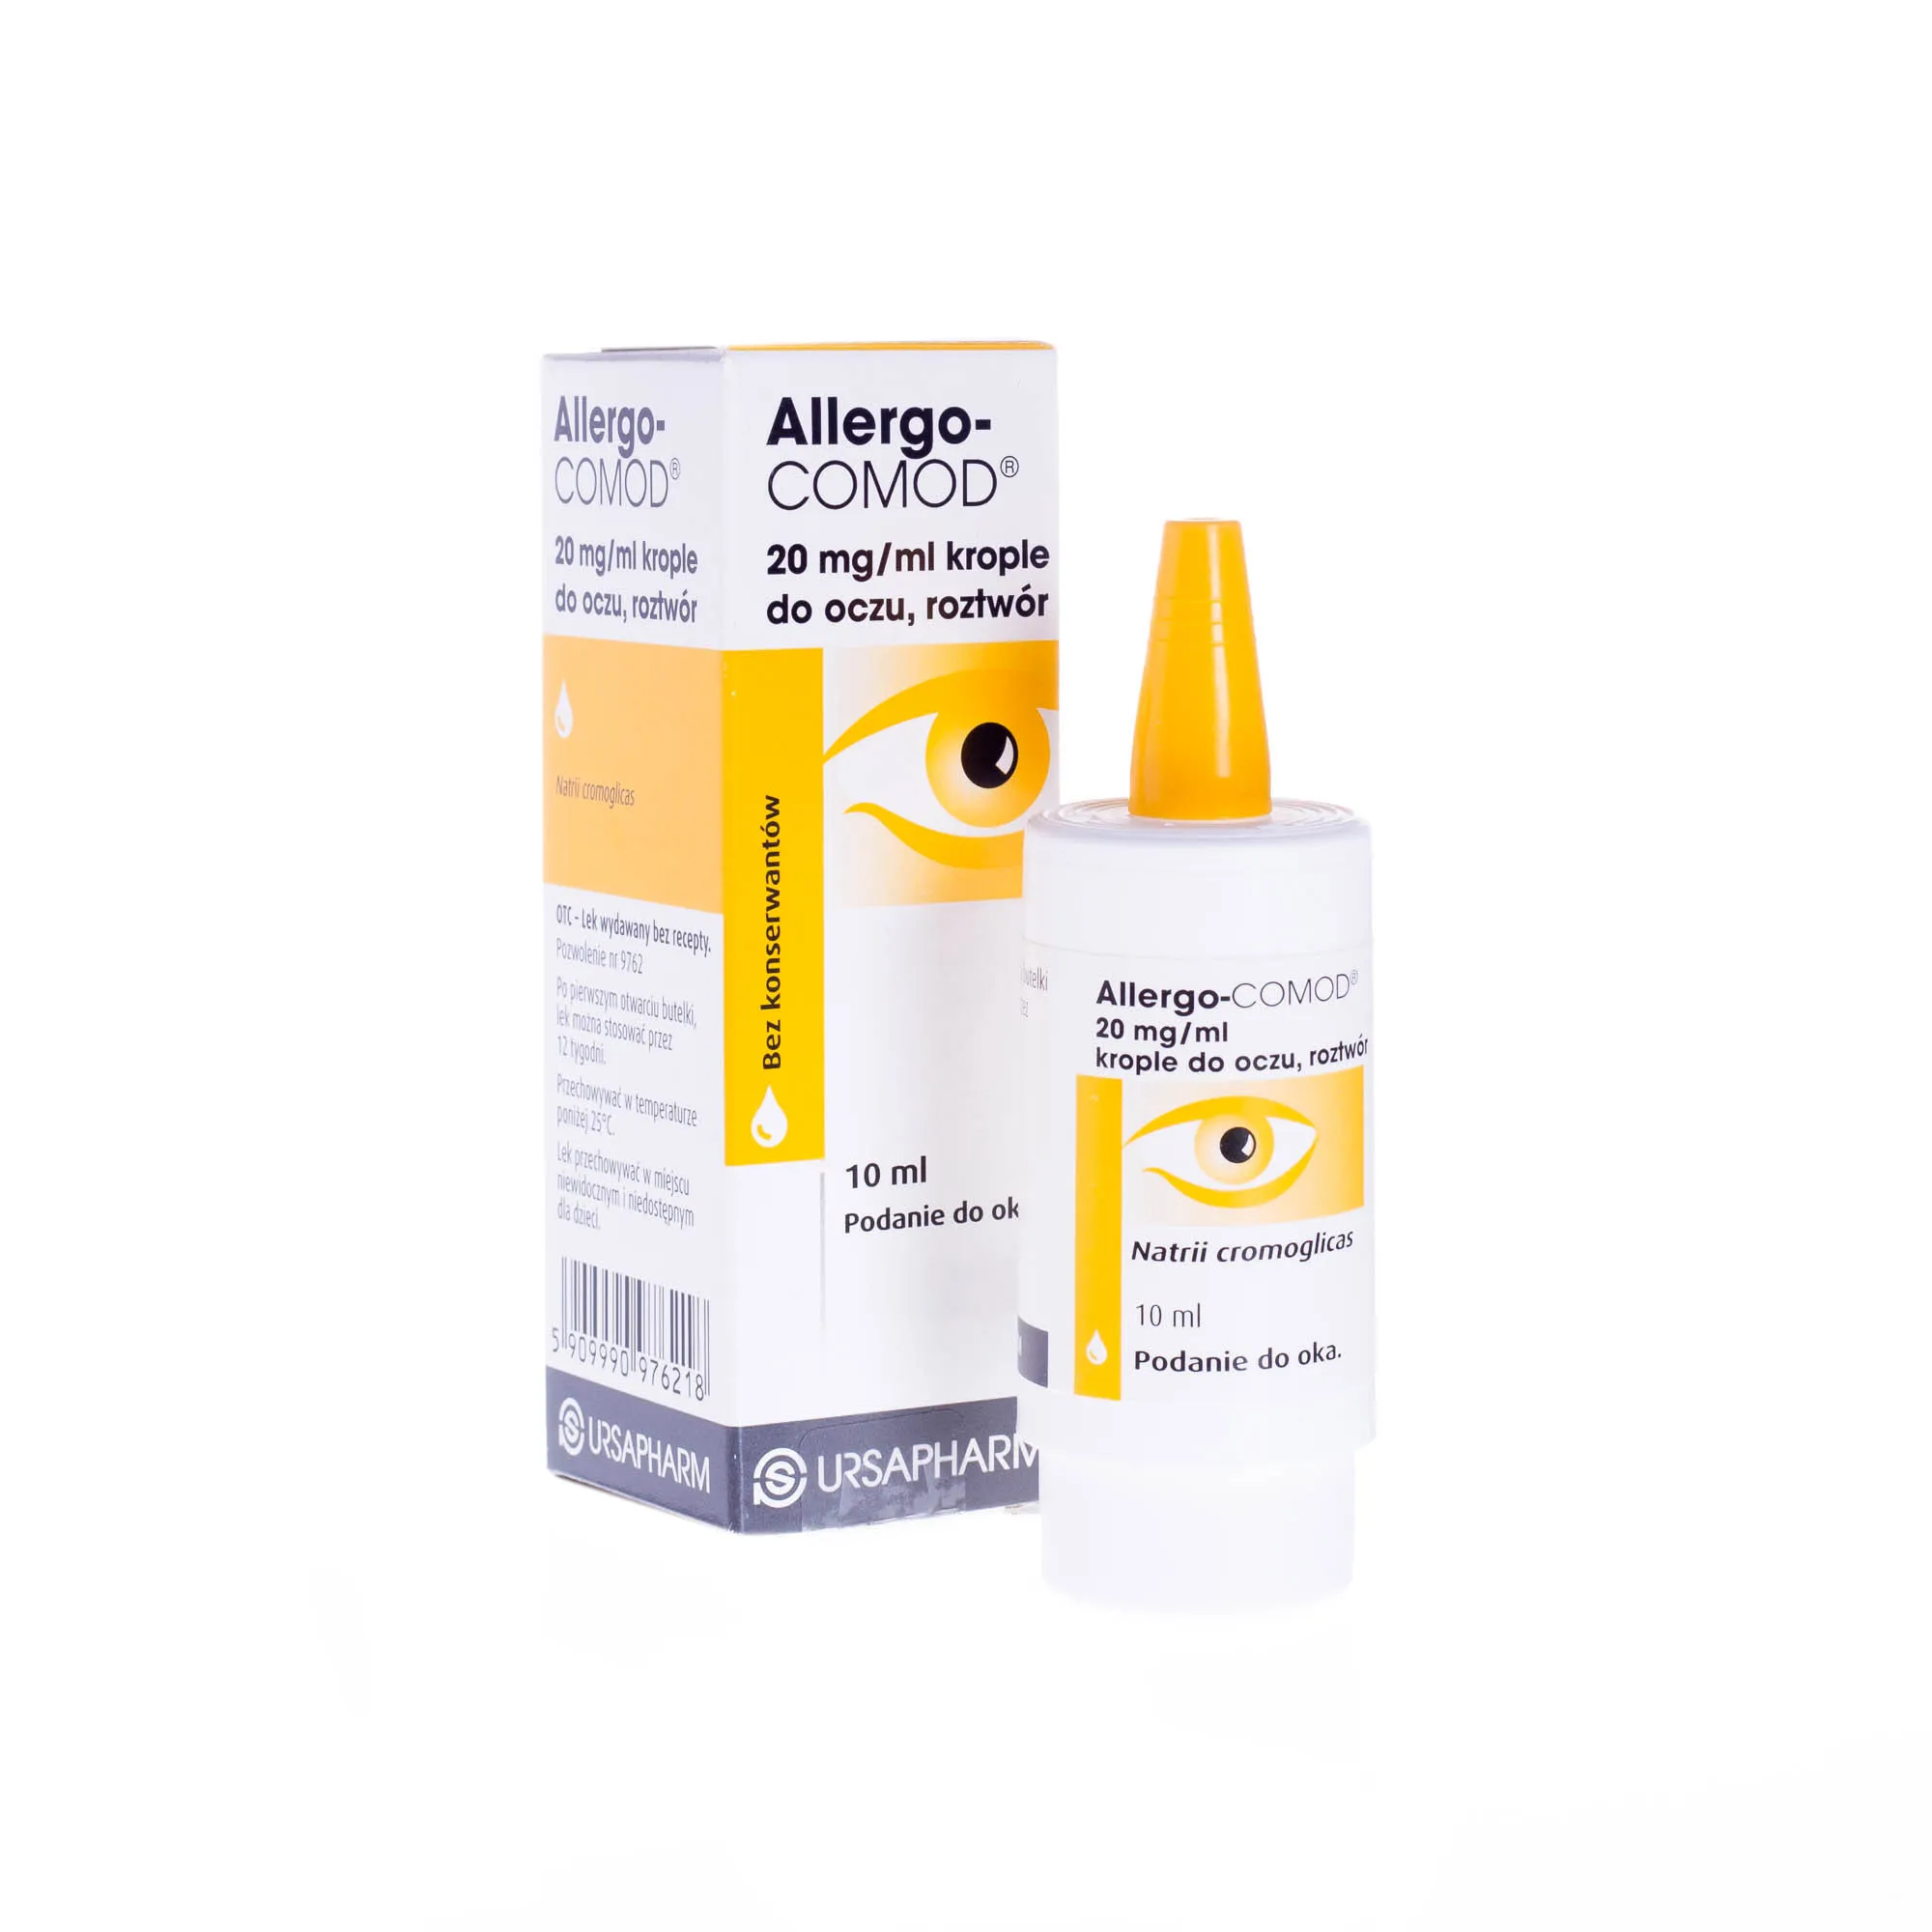 Allergo-COMOD 20 mg/ml krople do oczu, roztwór, 10 ml 